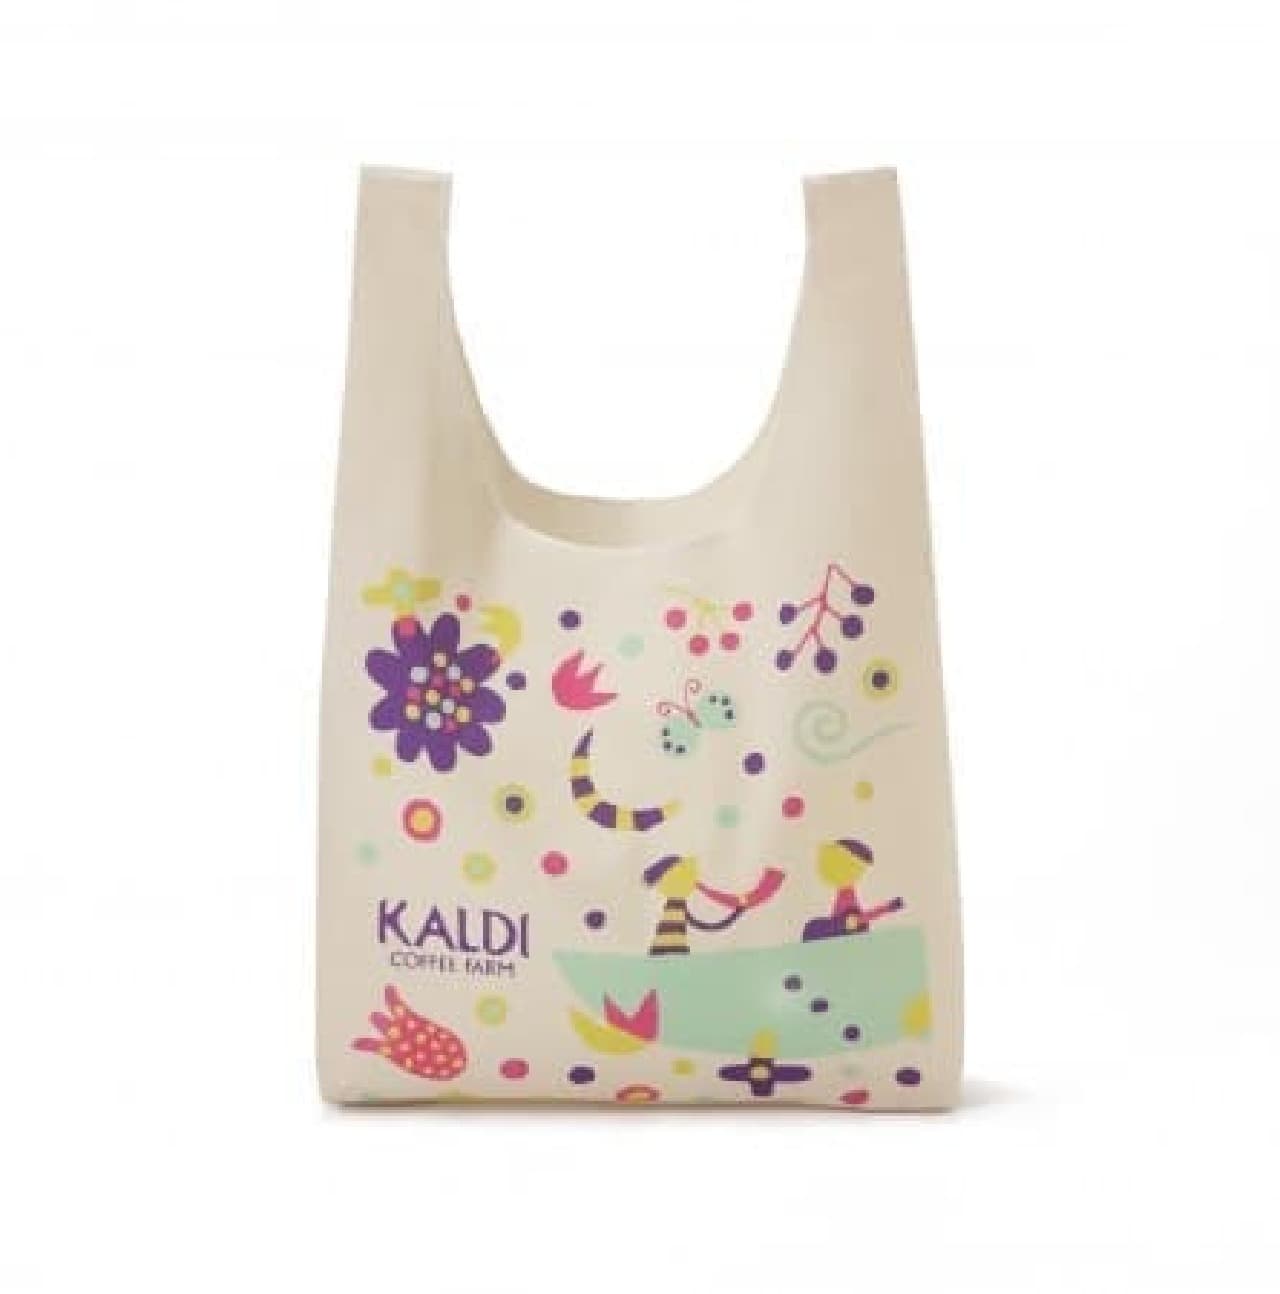 2018 lucky bag from KALDI